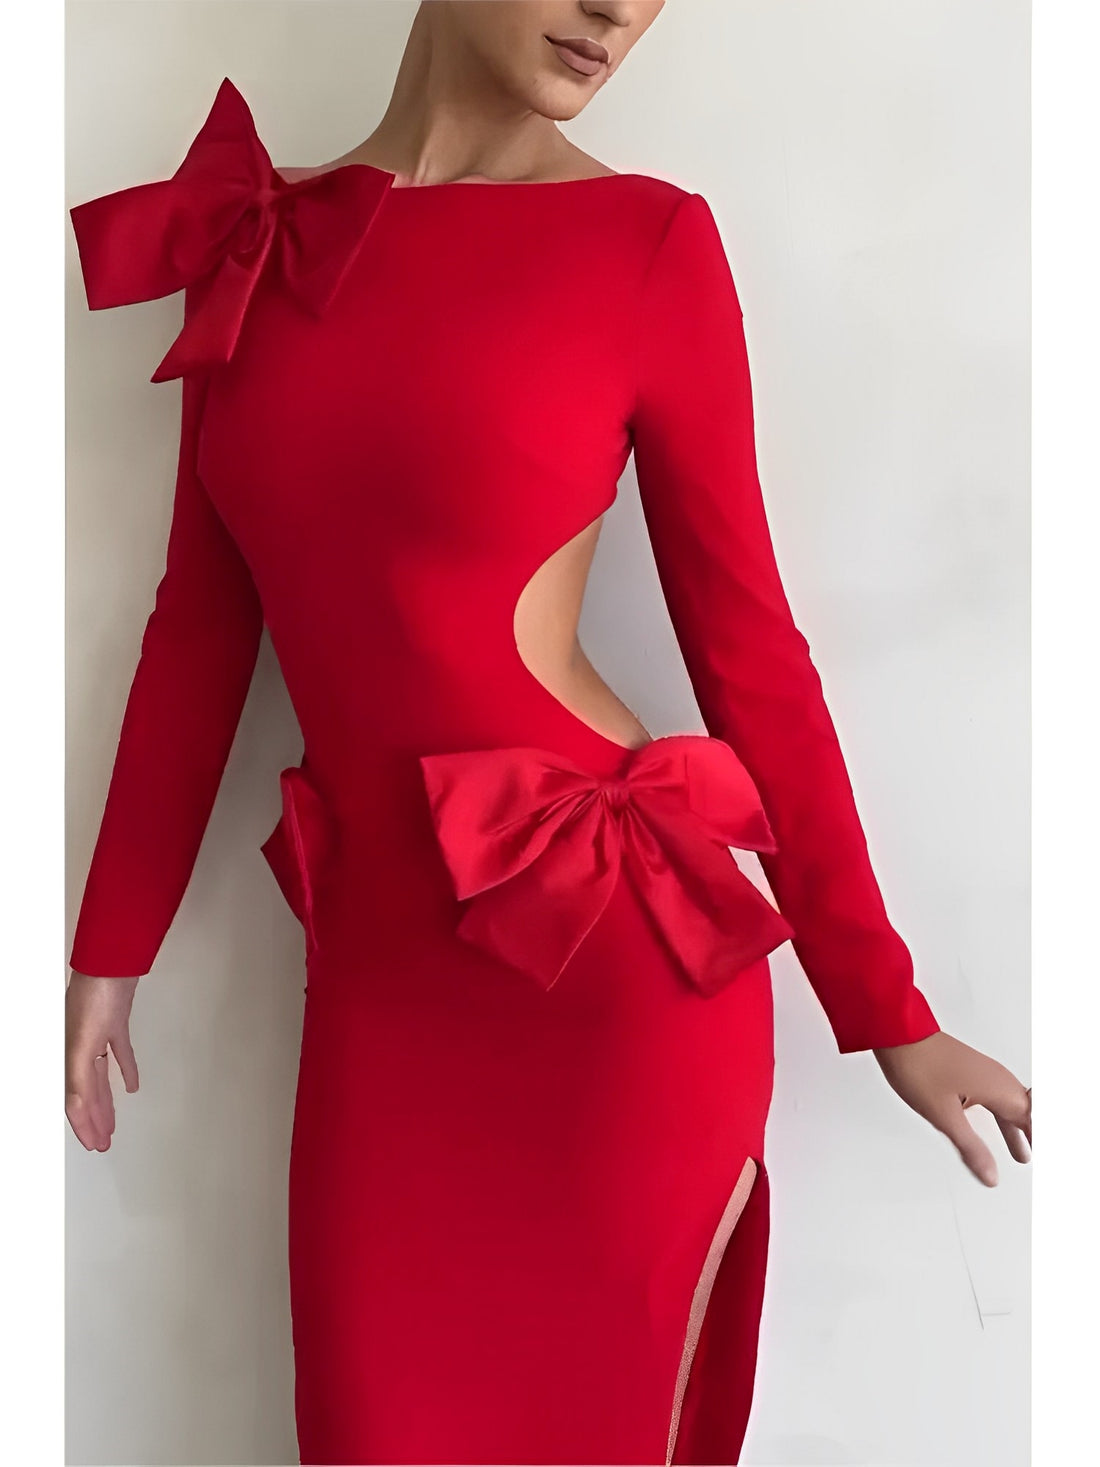 Carmine™ Dress with Bows Design